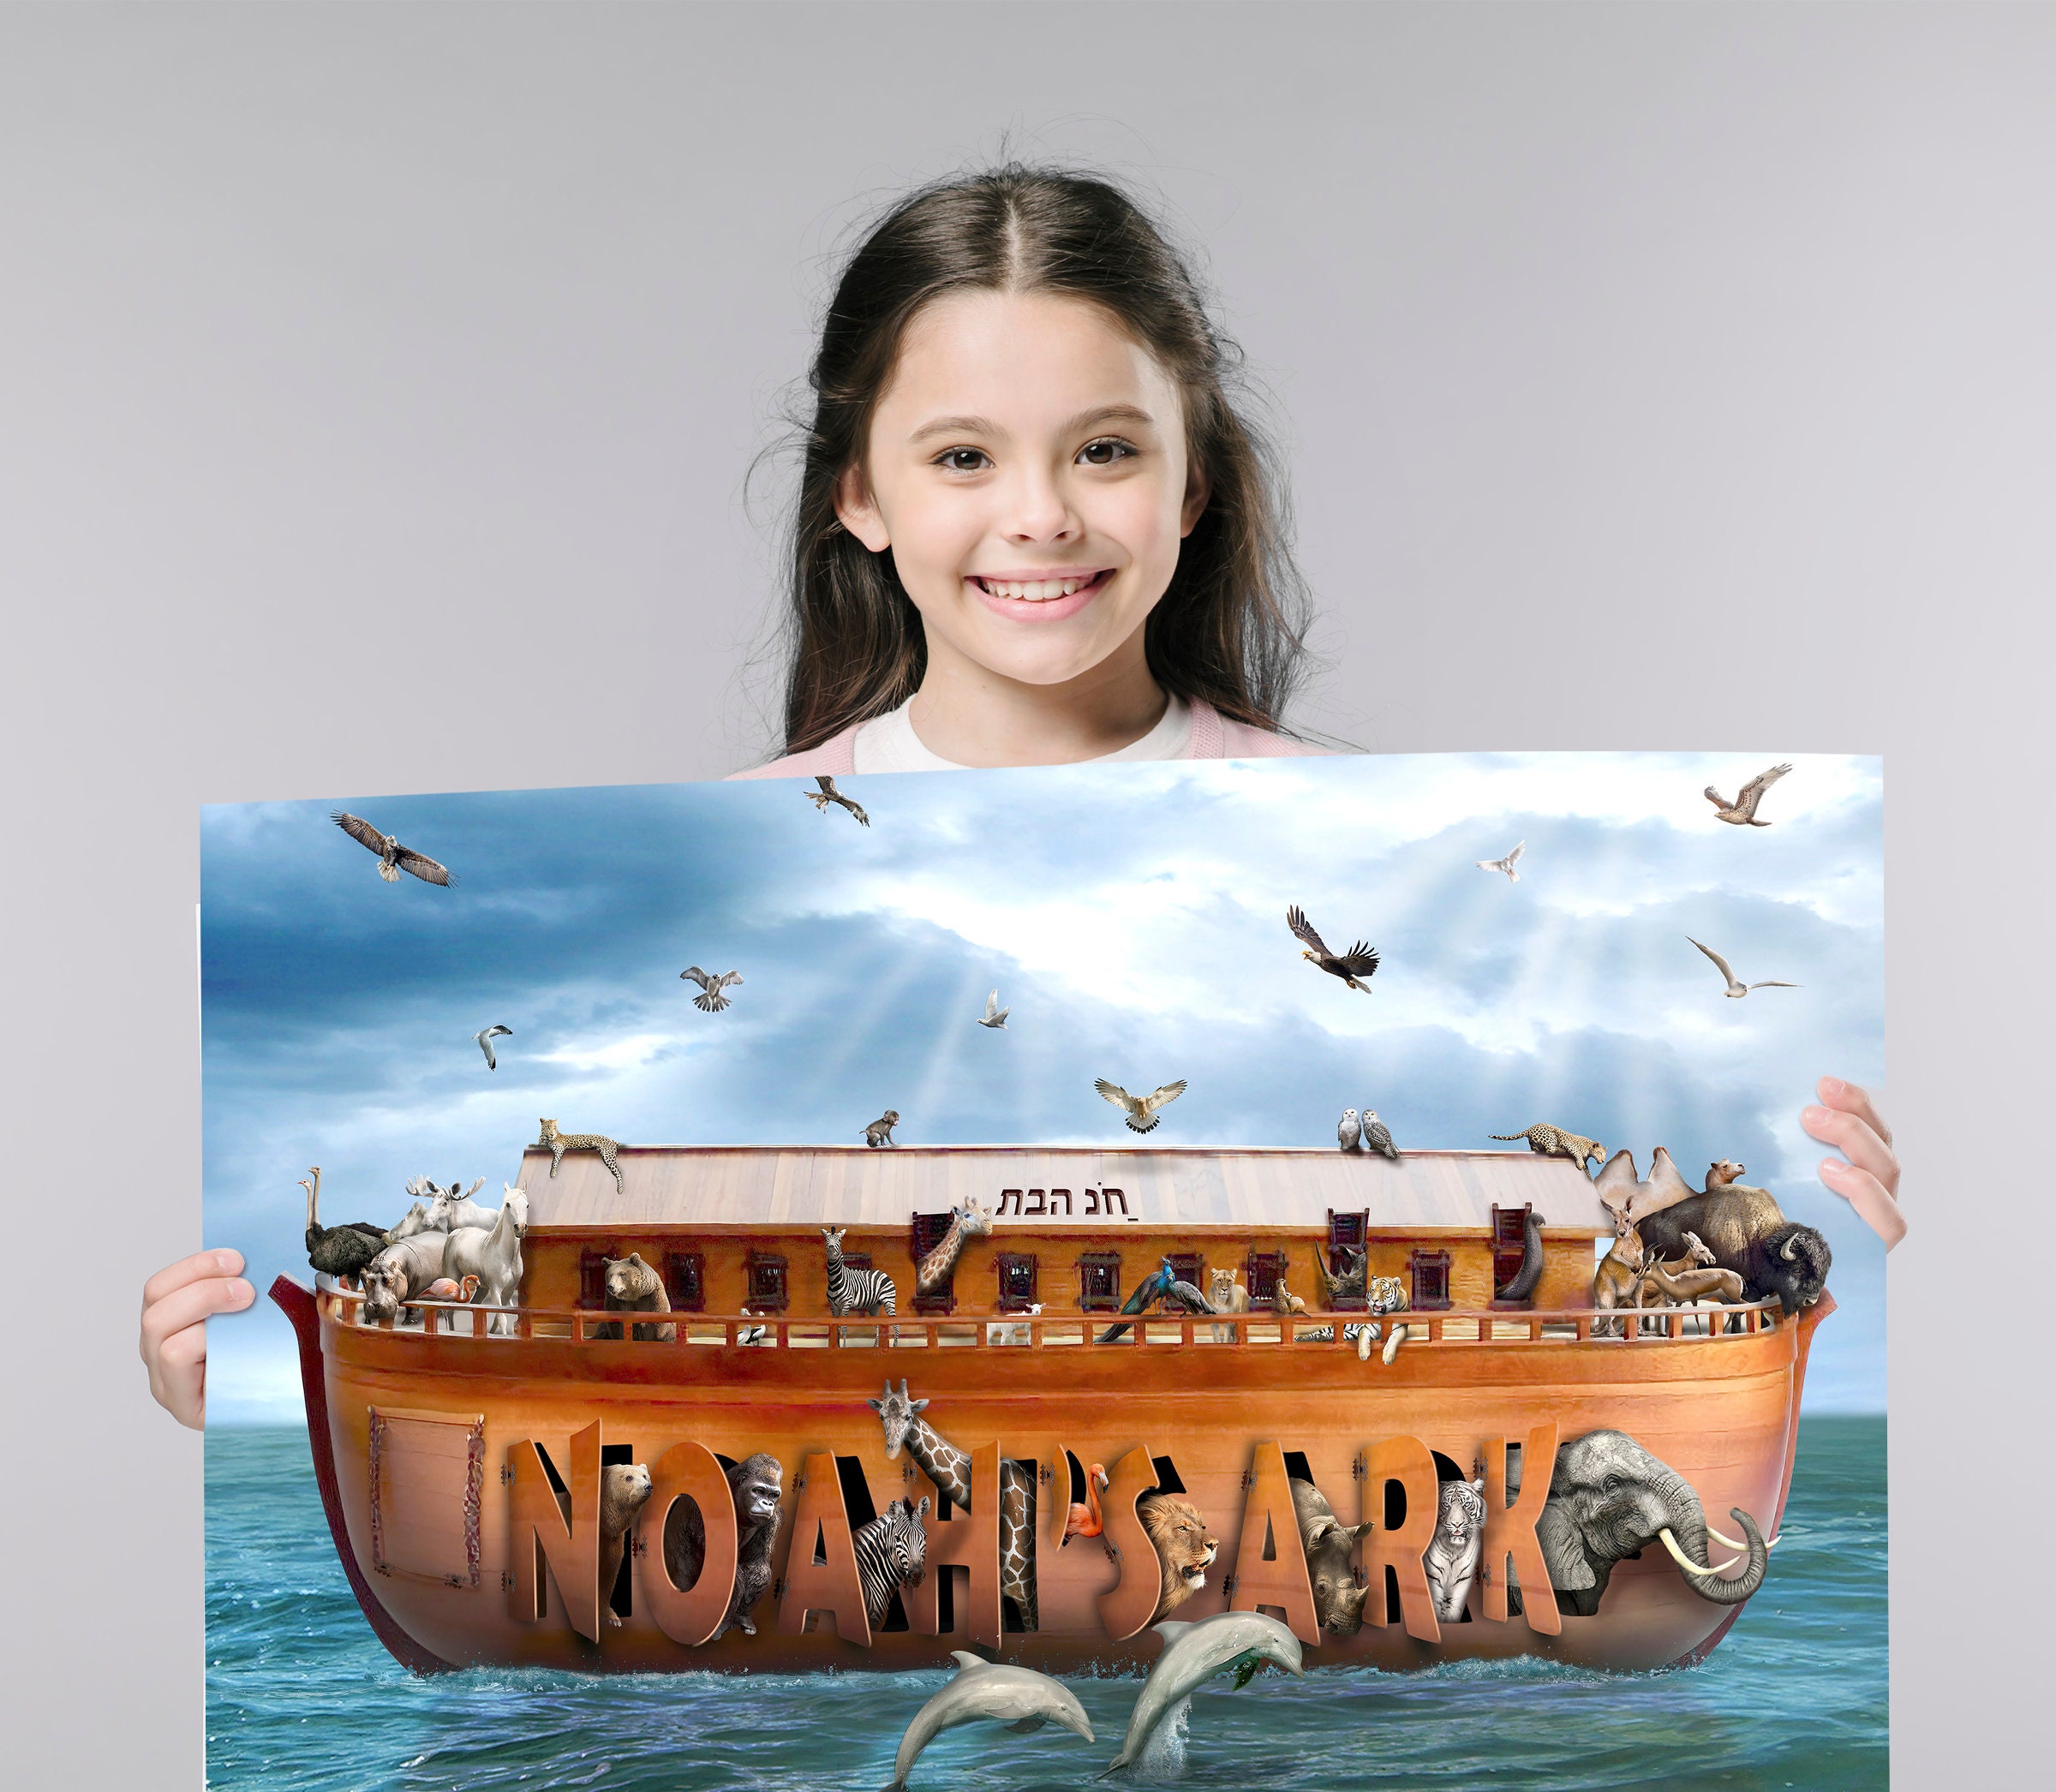 Noah's Ark Art Print Wall Poster Etsy Ireland